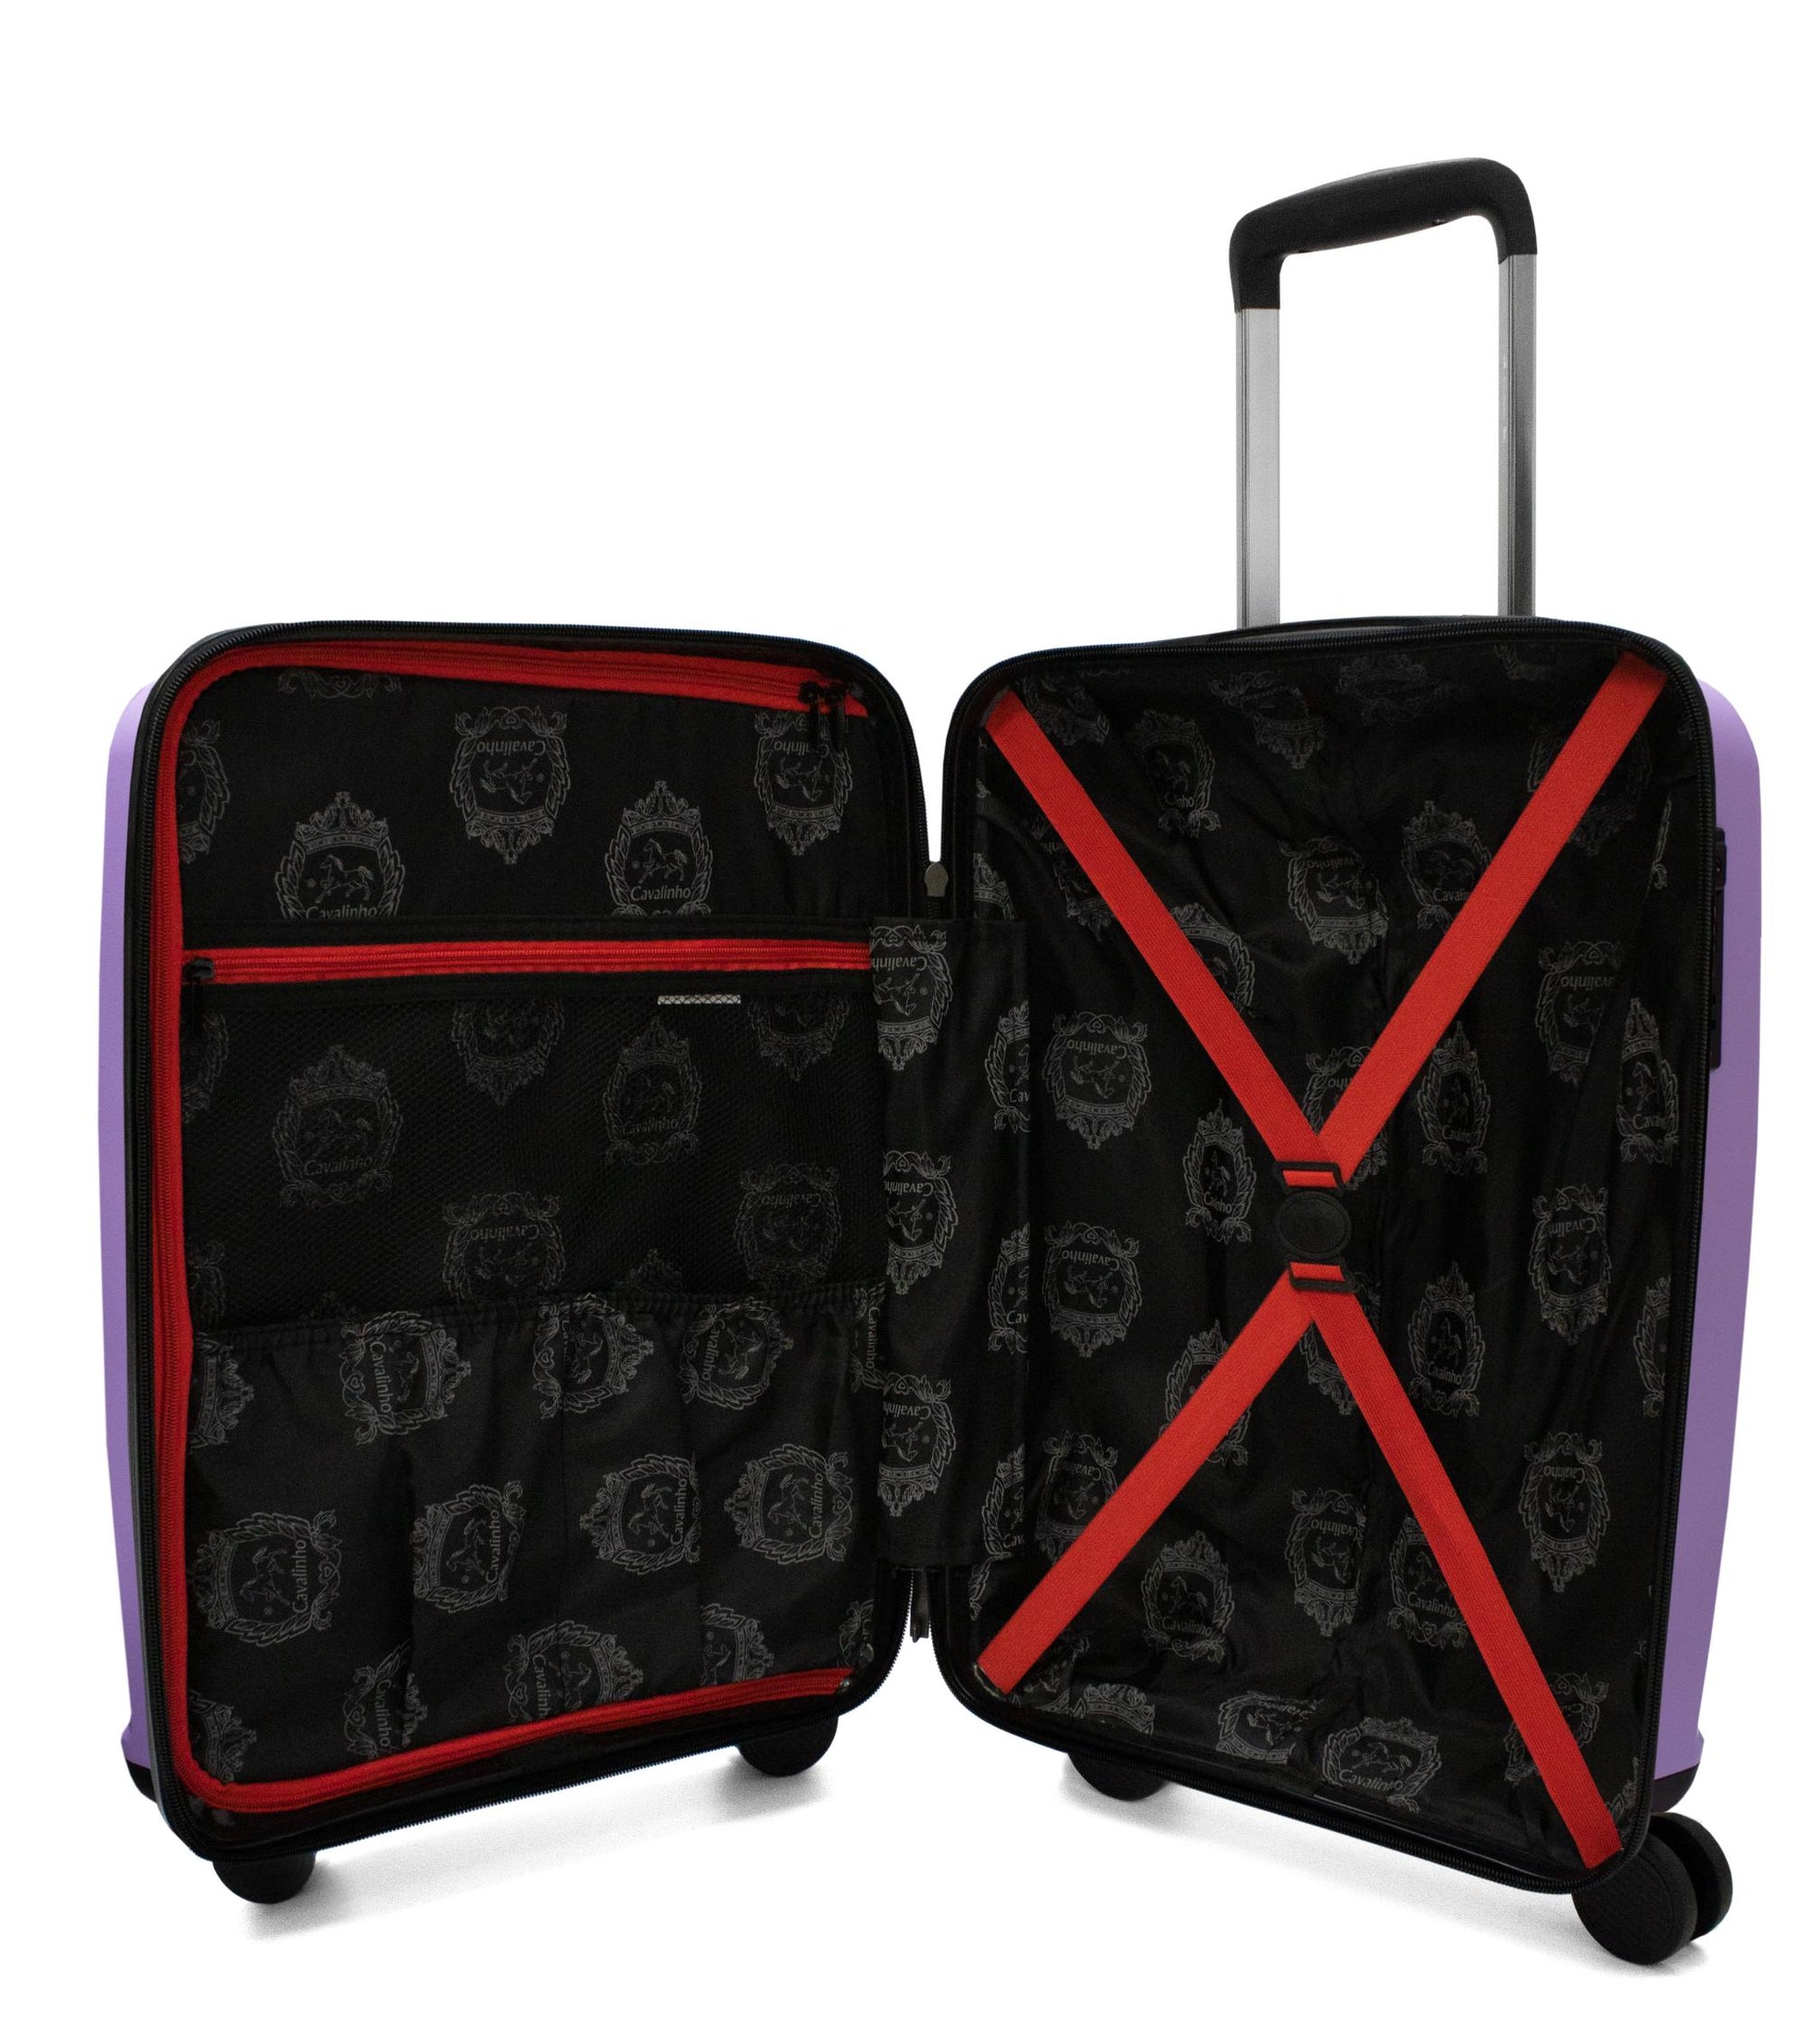 Cavalinho Colorful Carry-on Hardside Luggage (19") - 19 inch Lilac - 68020004.39.19_4